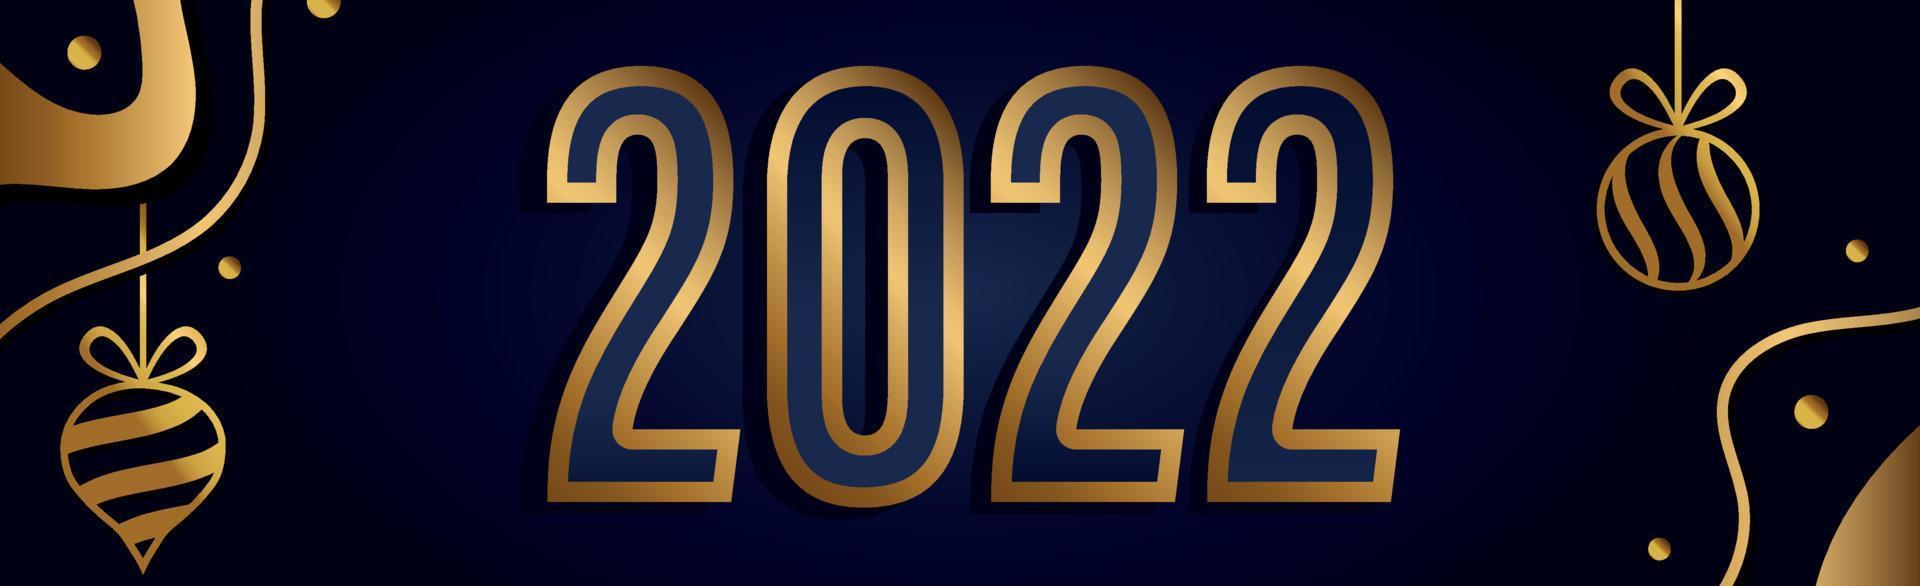 feliz ano novo 2022, feriado de natal, banner da web para publicidade - vetor